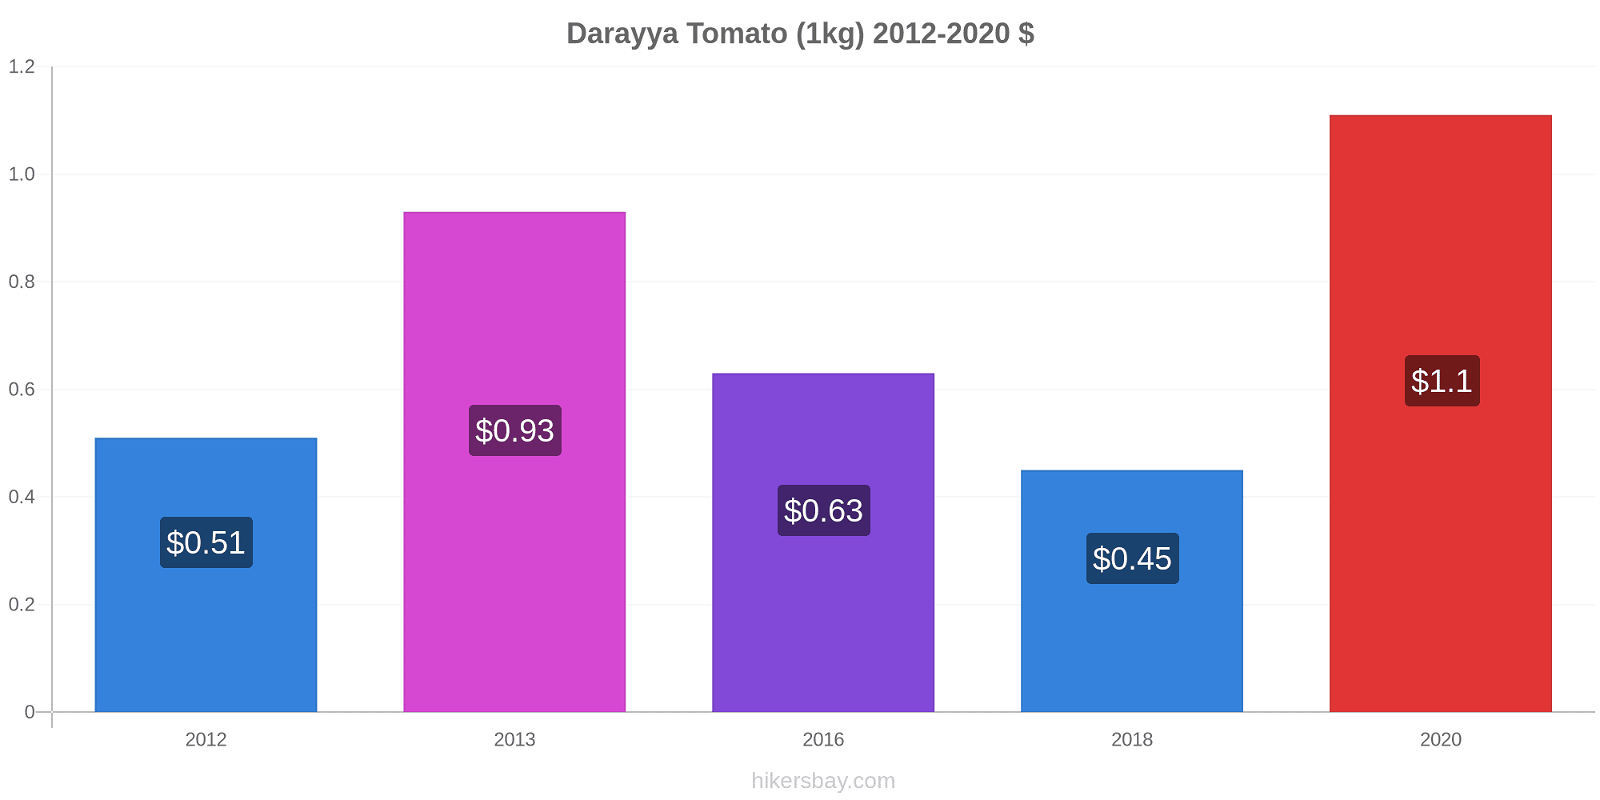 Darayya price changes Tomato (1kg) hikersbay.com